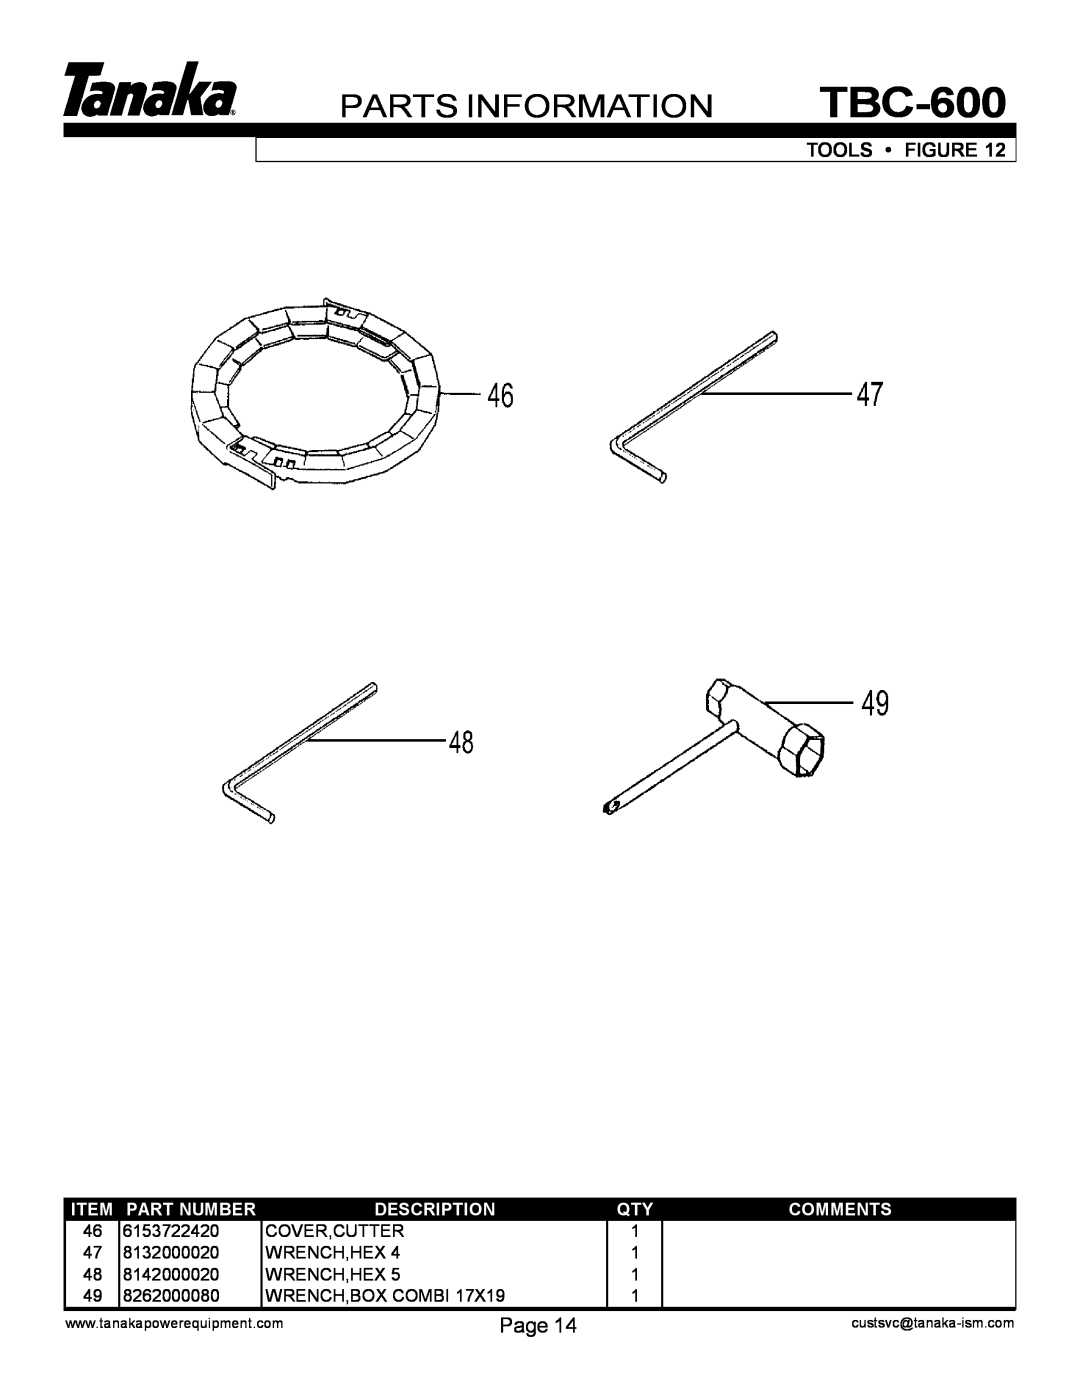 Tanaka TBC-600 manual Tools Figure, Parts Information, Page, Item Part Number, Description, Comments 